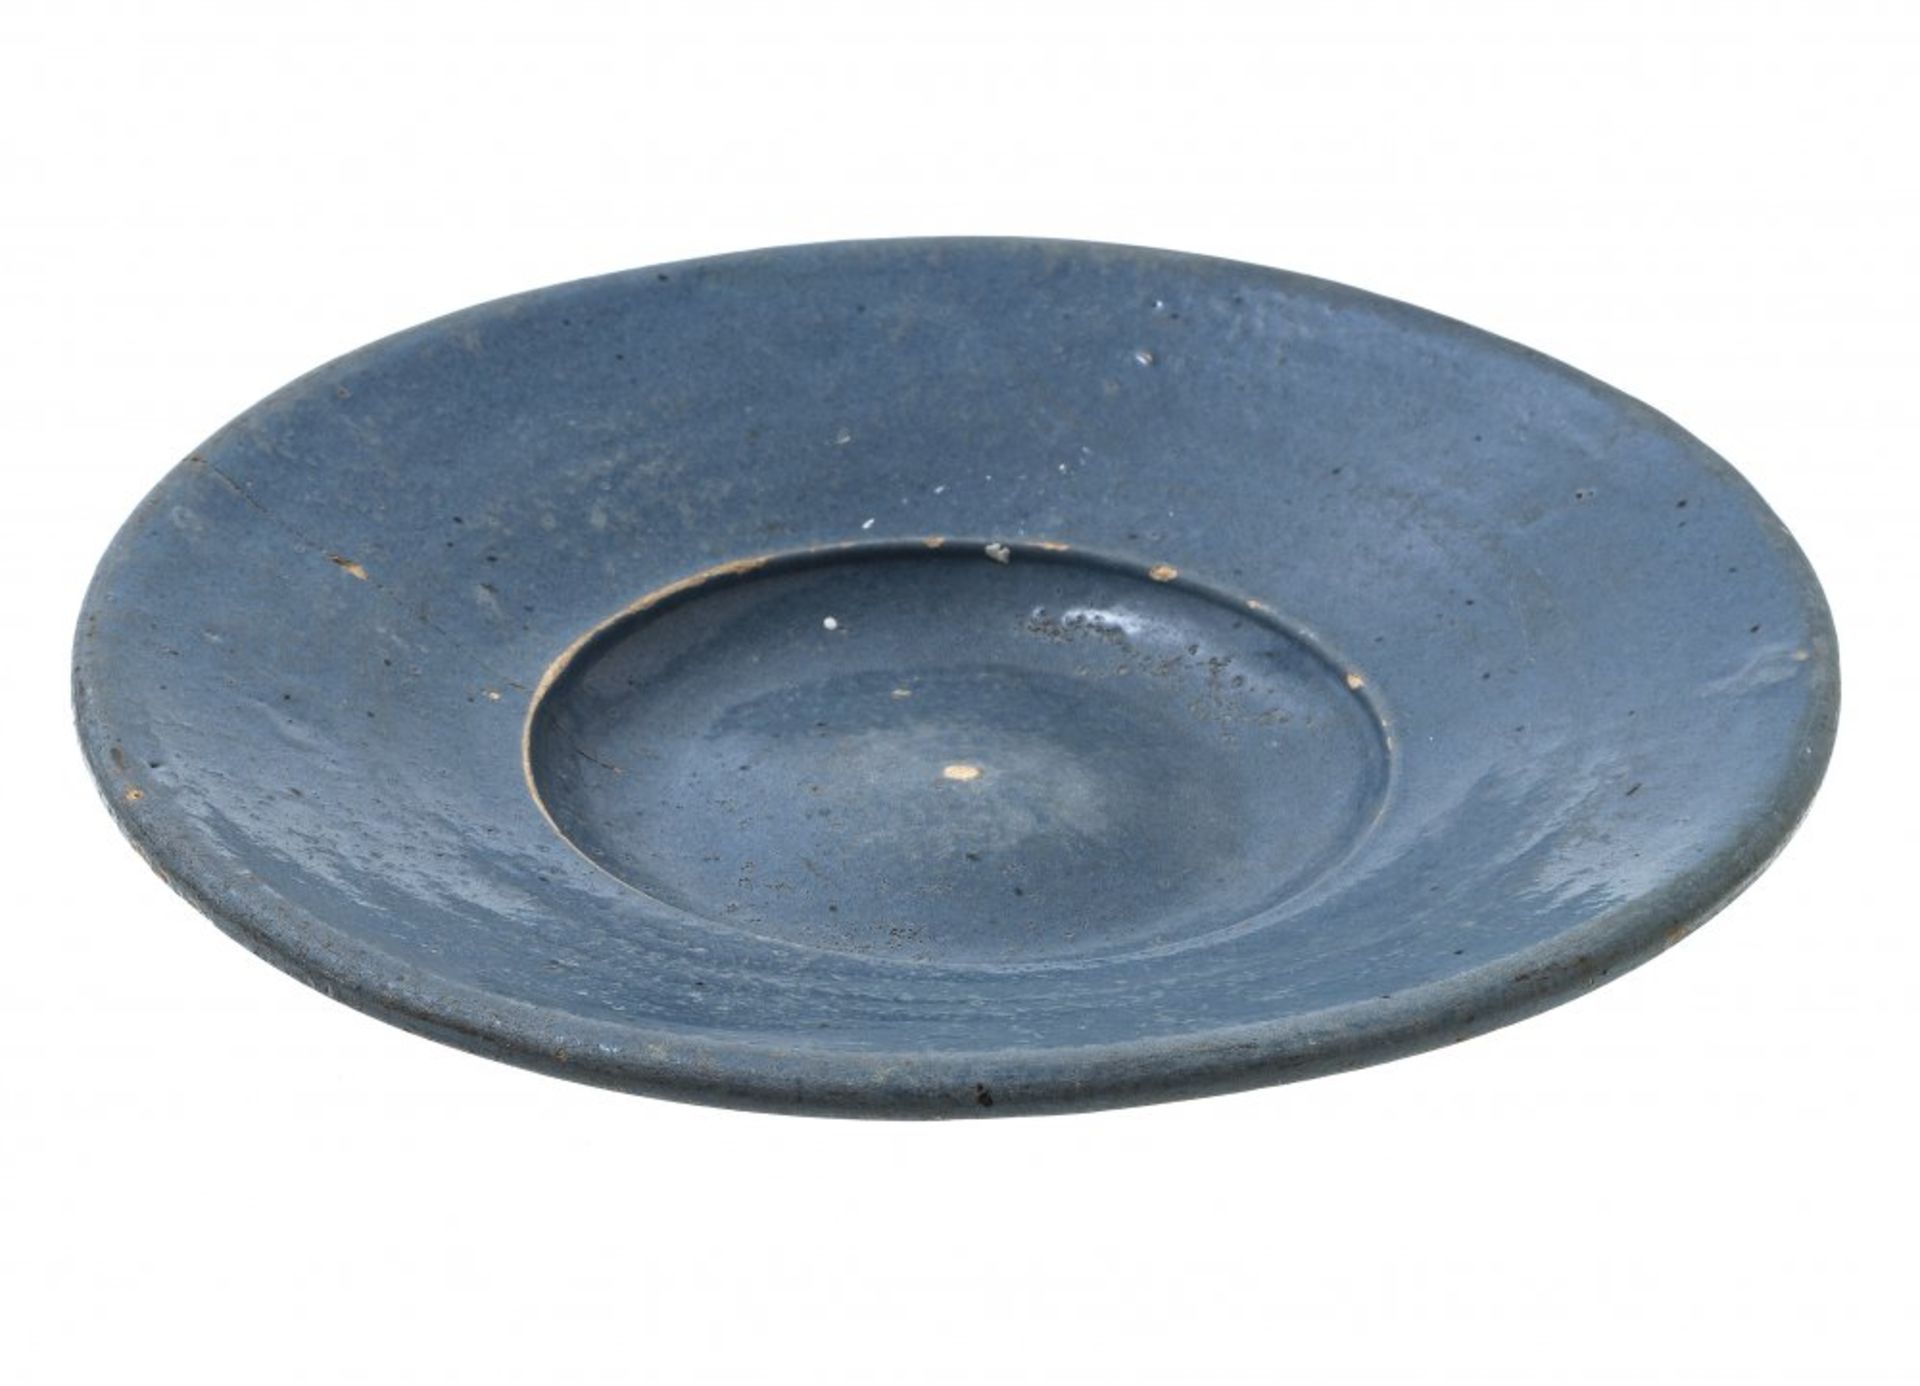 PlatteKröning, 19. Jh. Irdenware, hellblau glasiert. Riss, best., rest. ø35,5 cm.plateKröning,